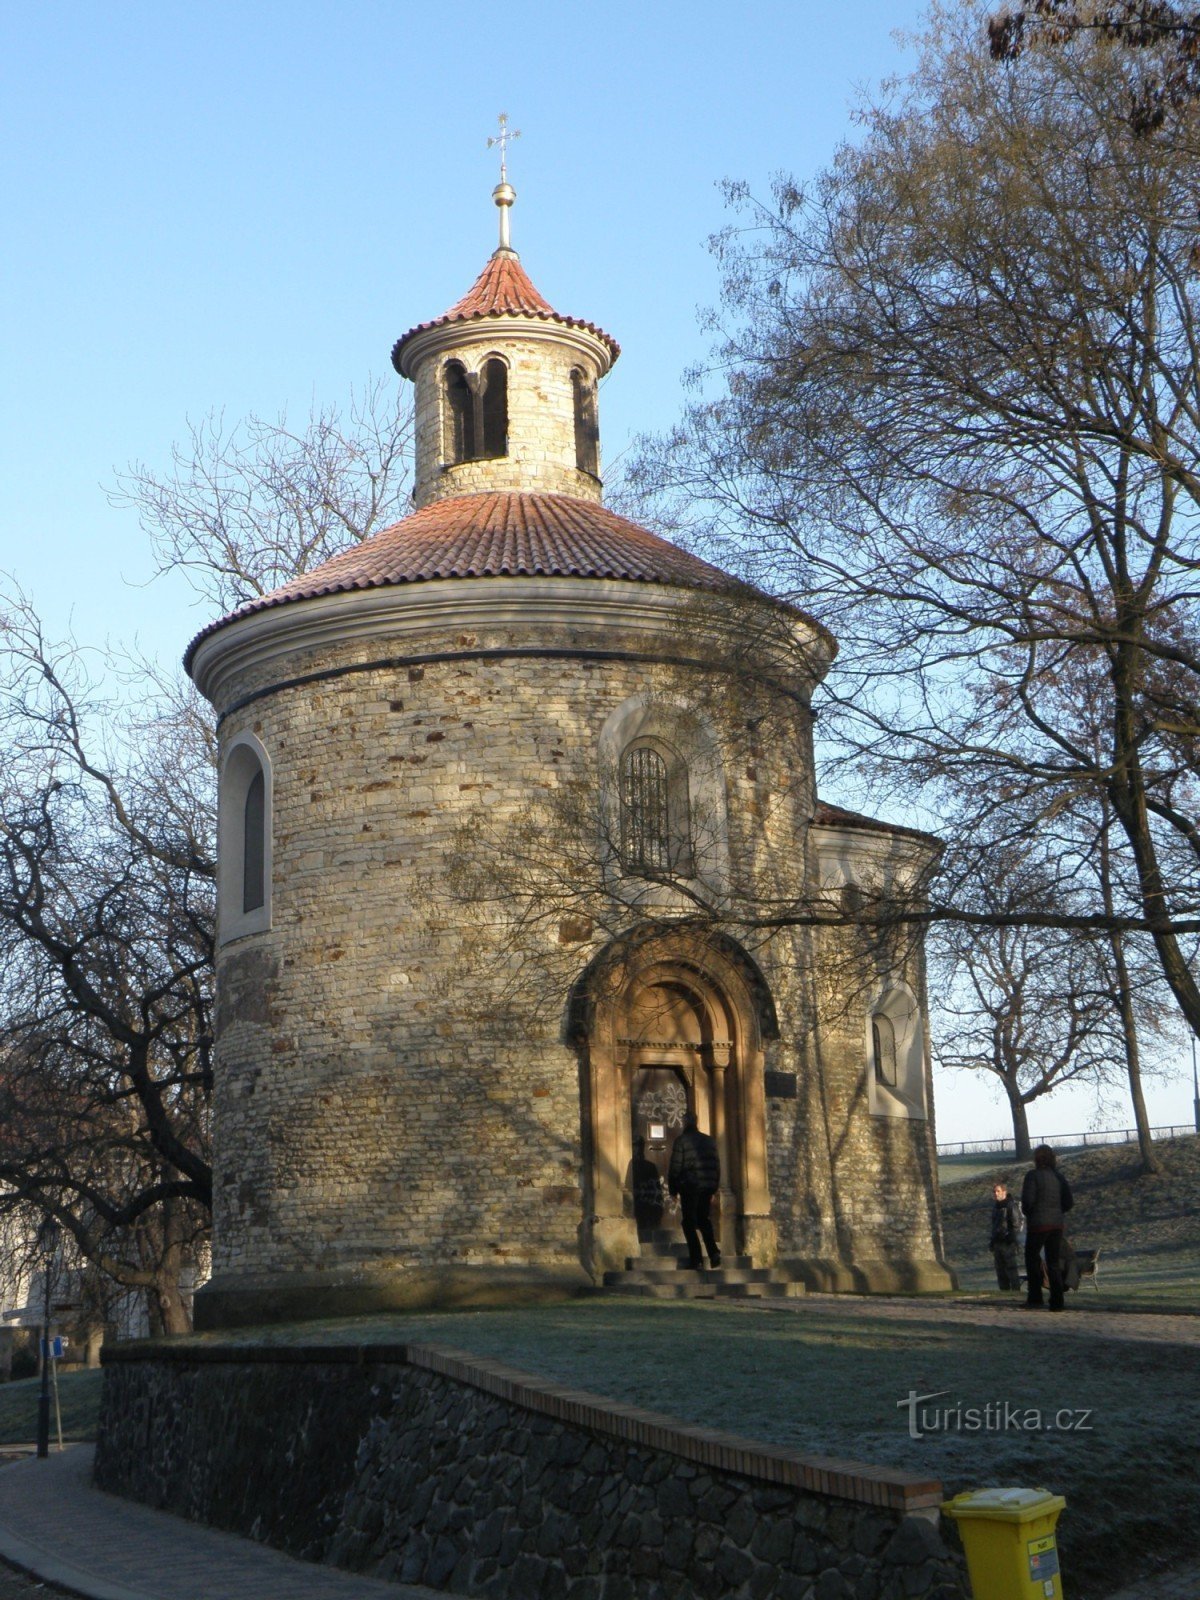 Saint Martin's Rotunda